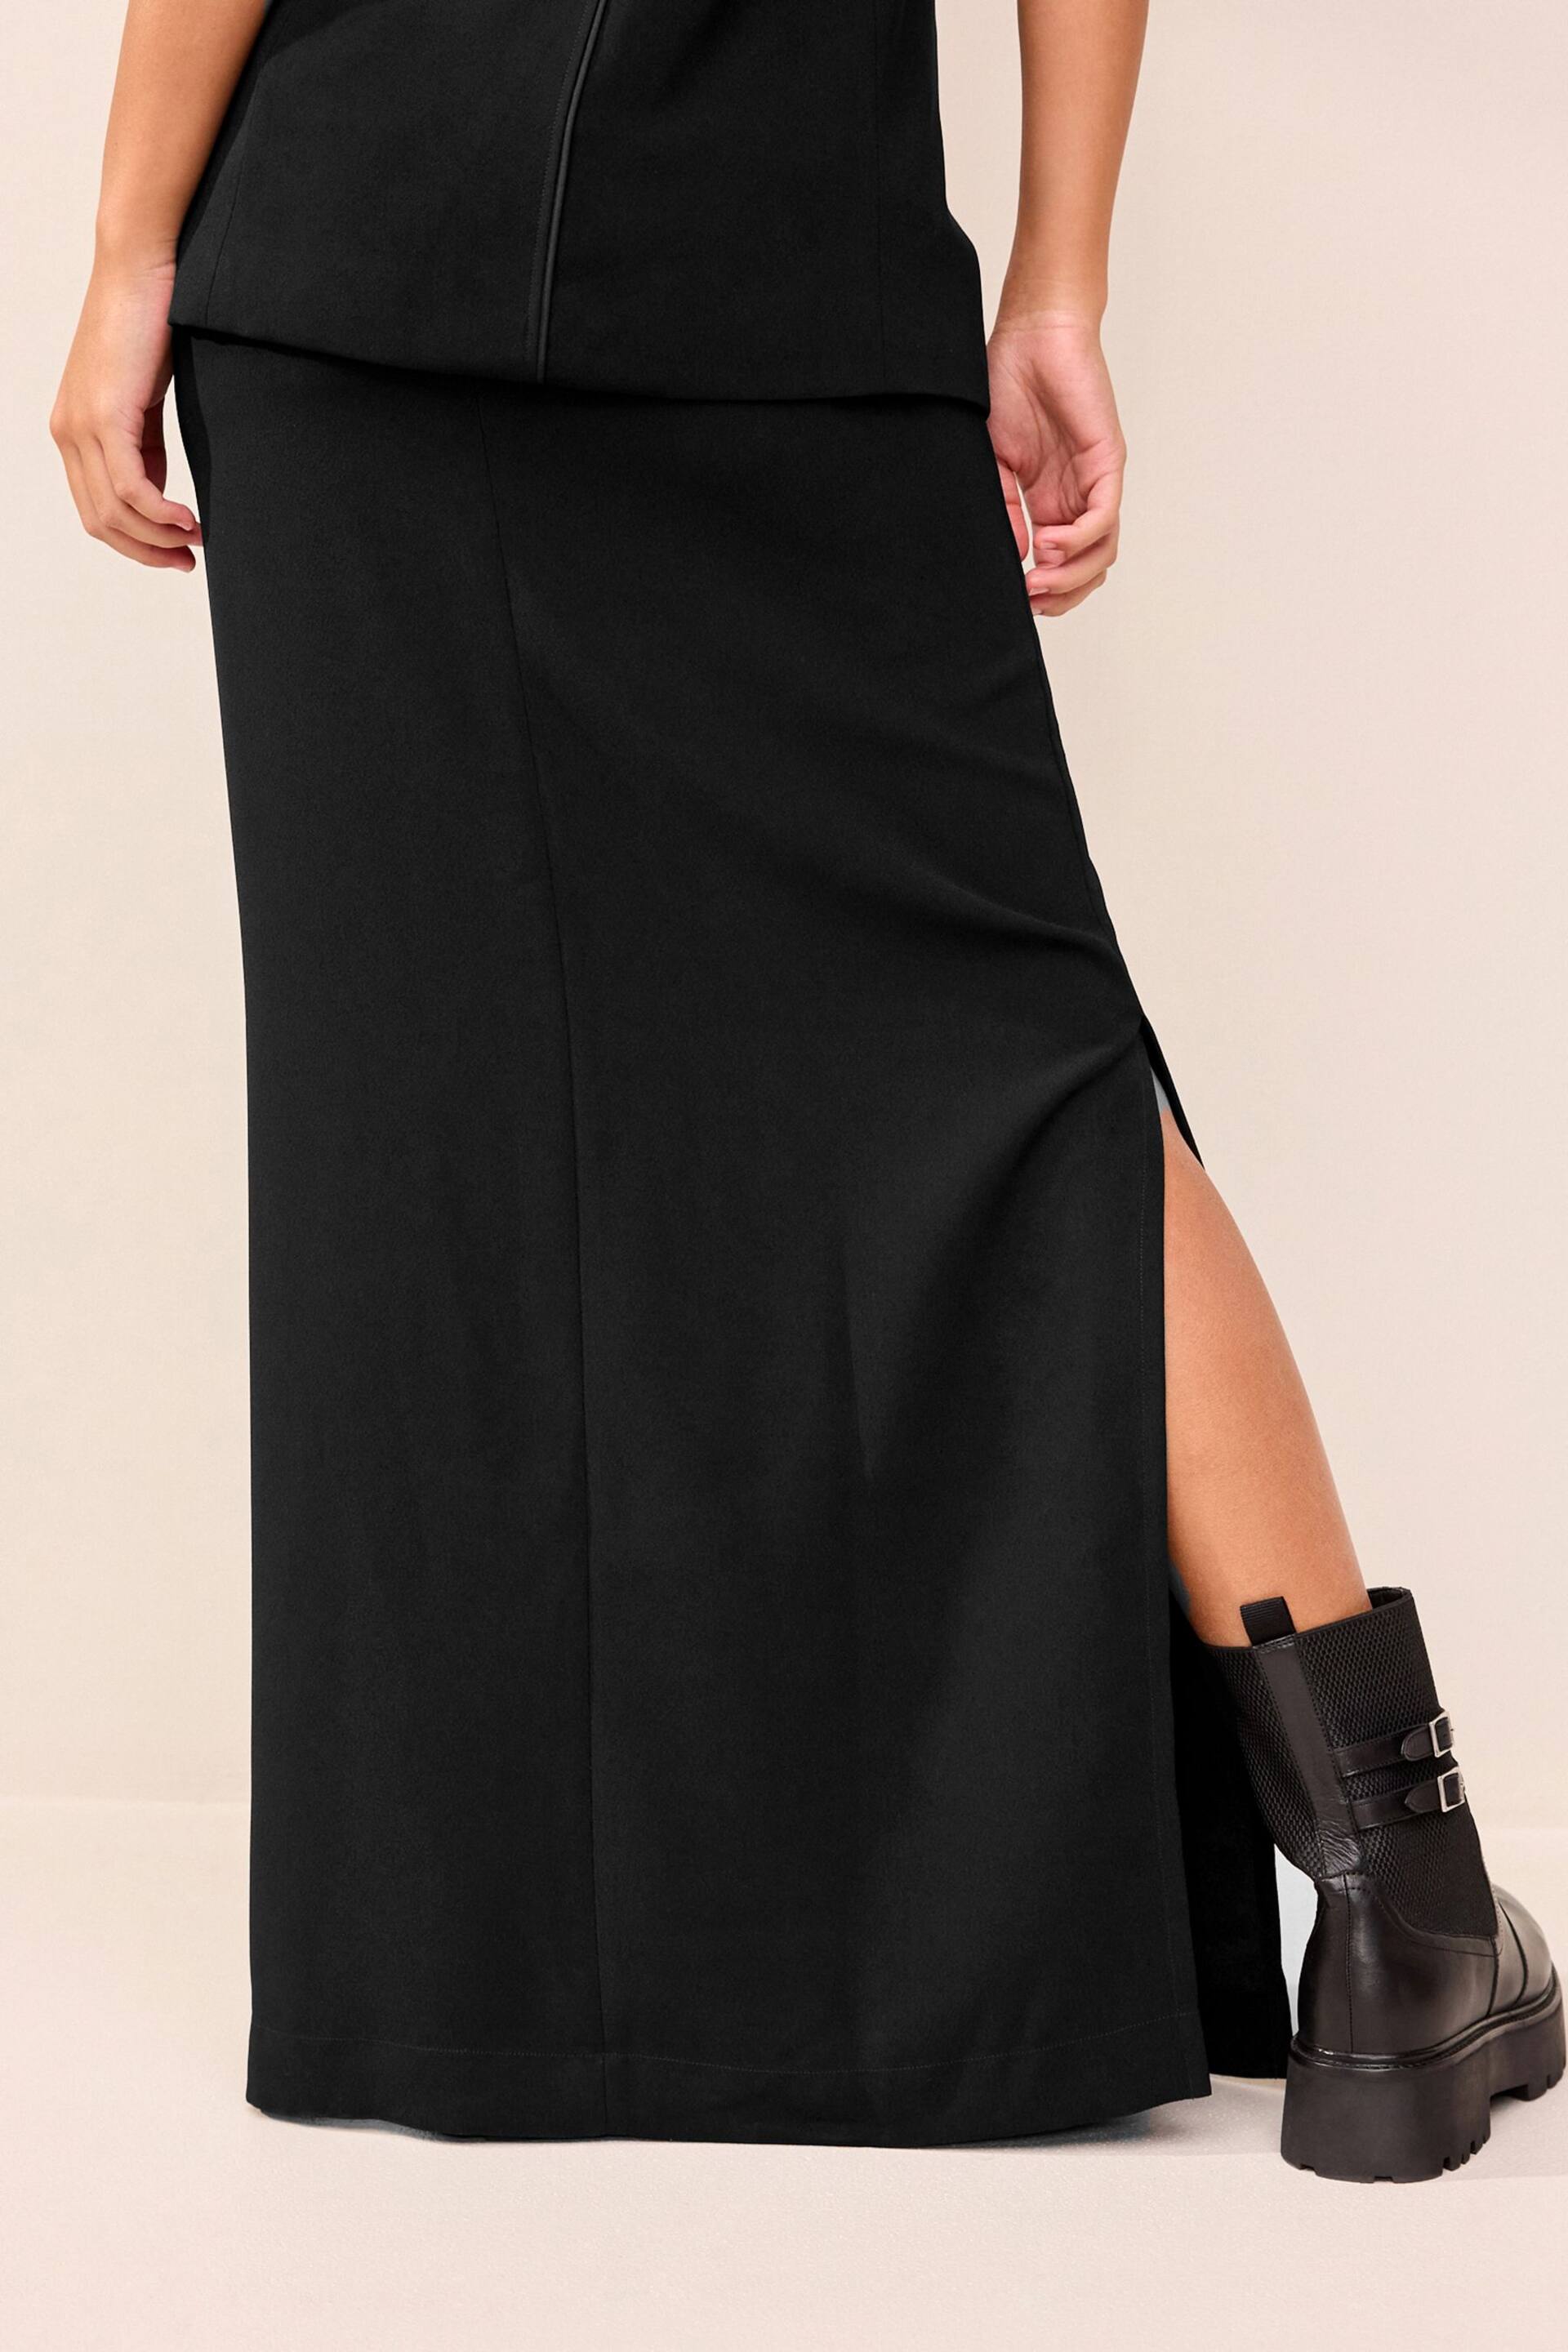 Black Tailored Crepe Column Skirt - Image 3 of 6